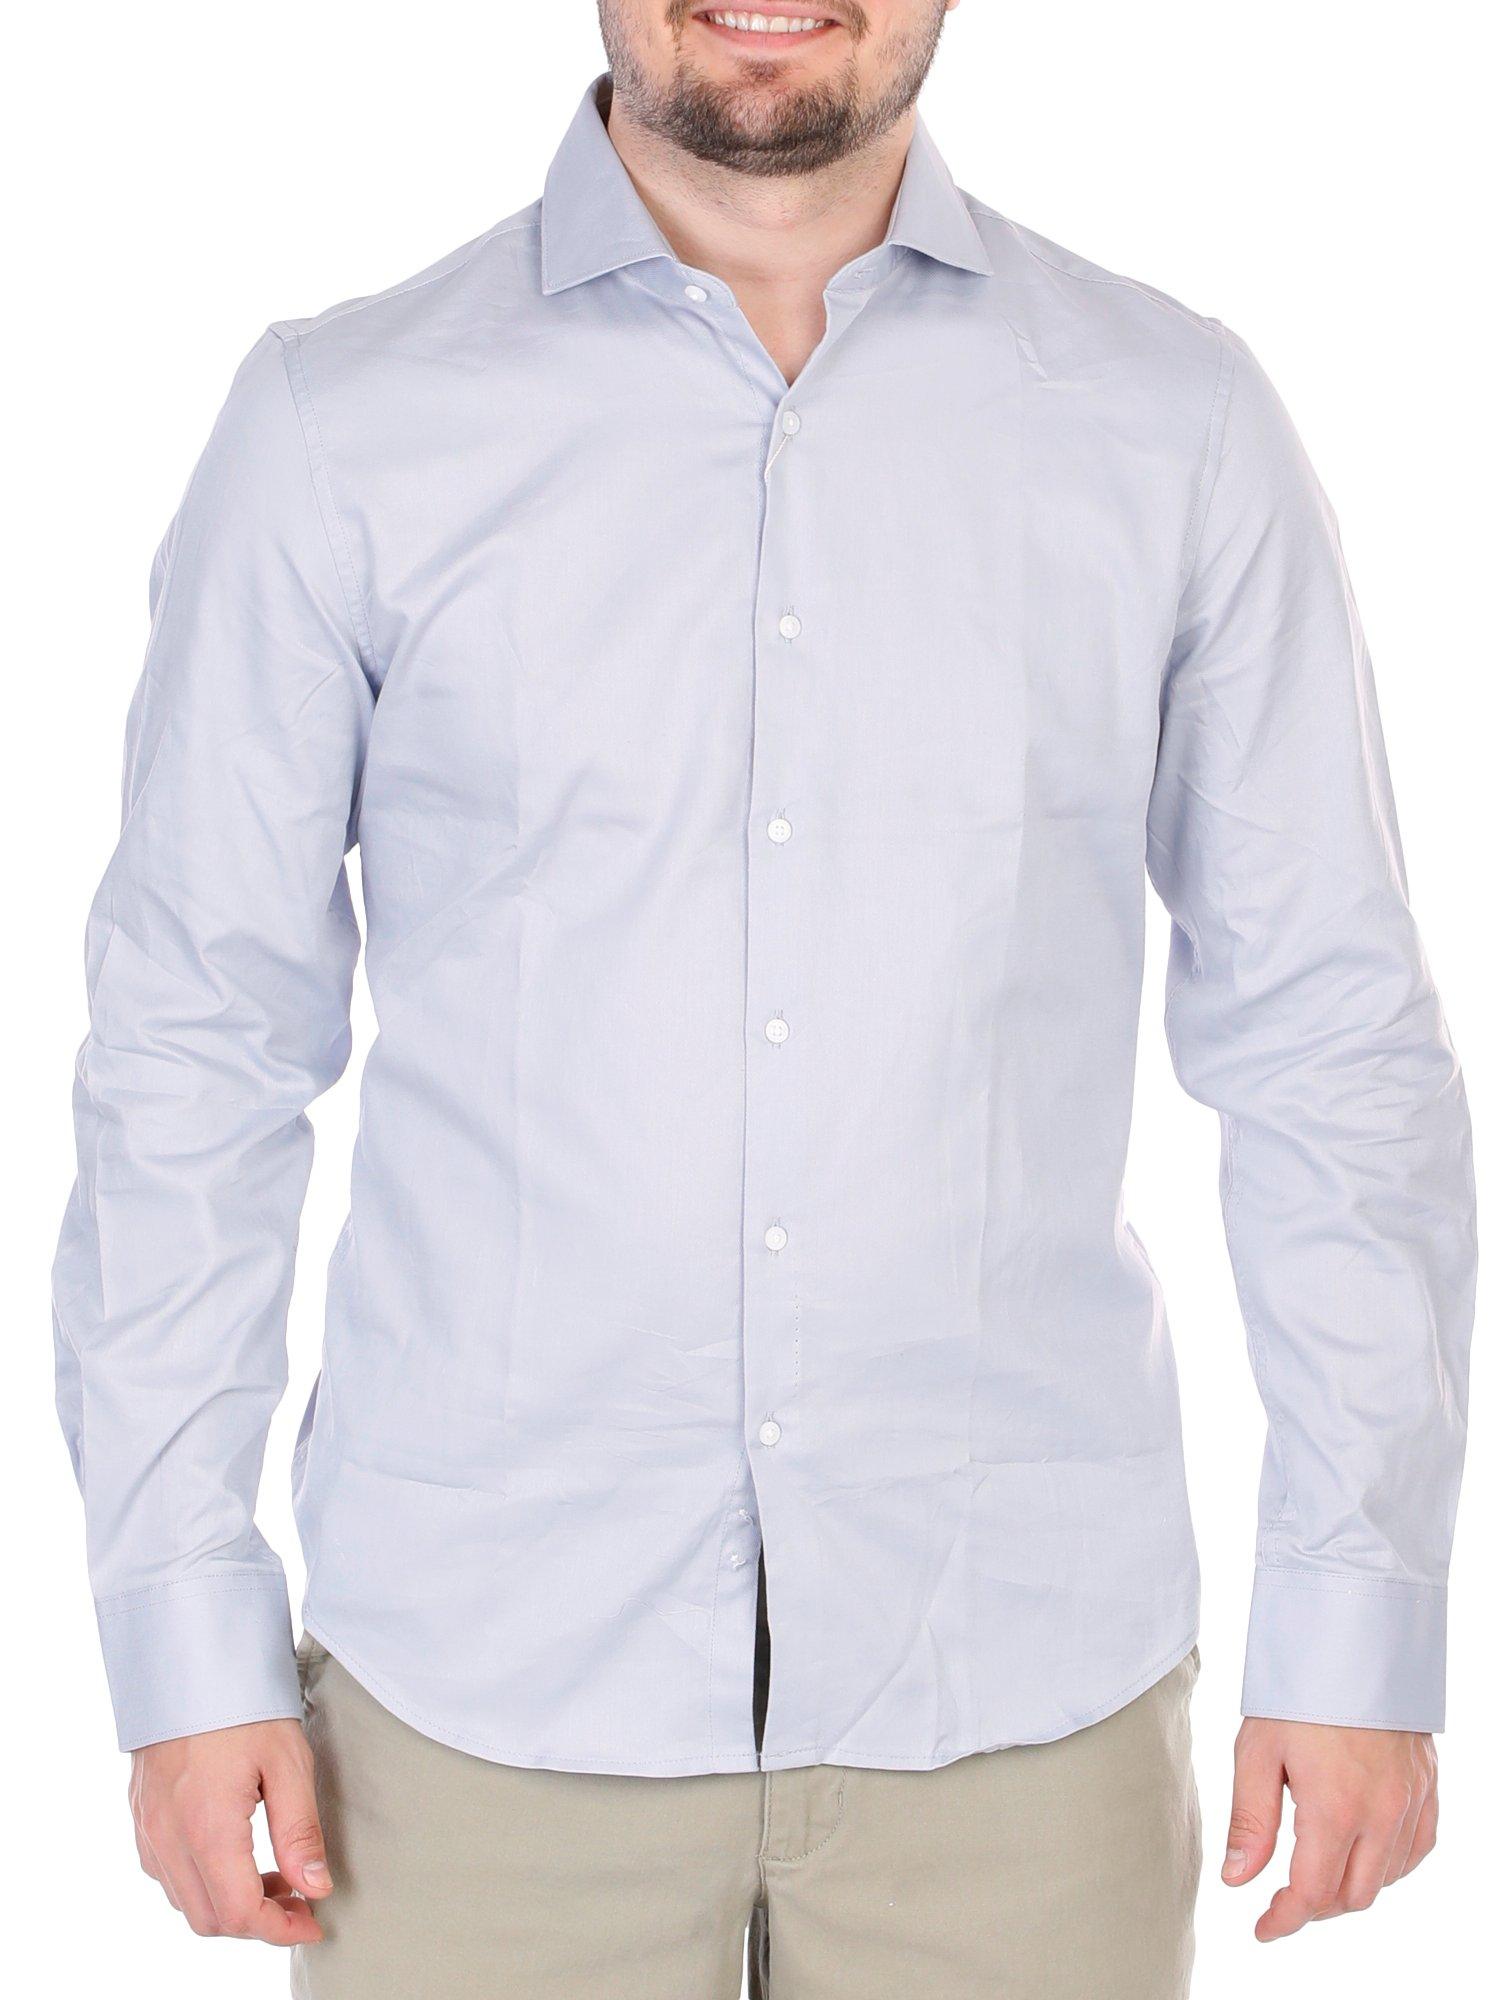 Men's Solid Button Down Shirt